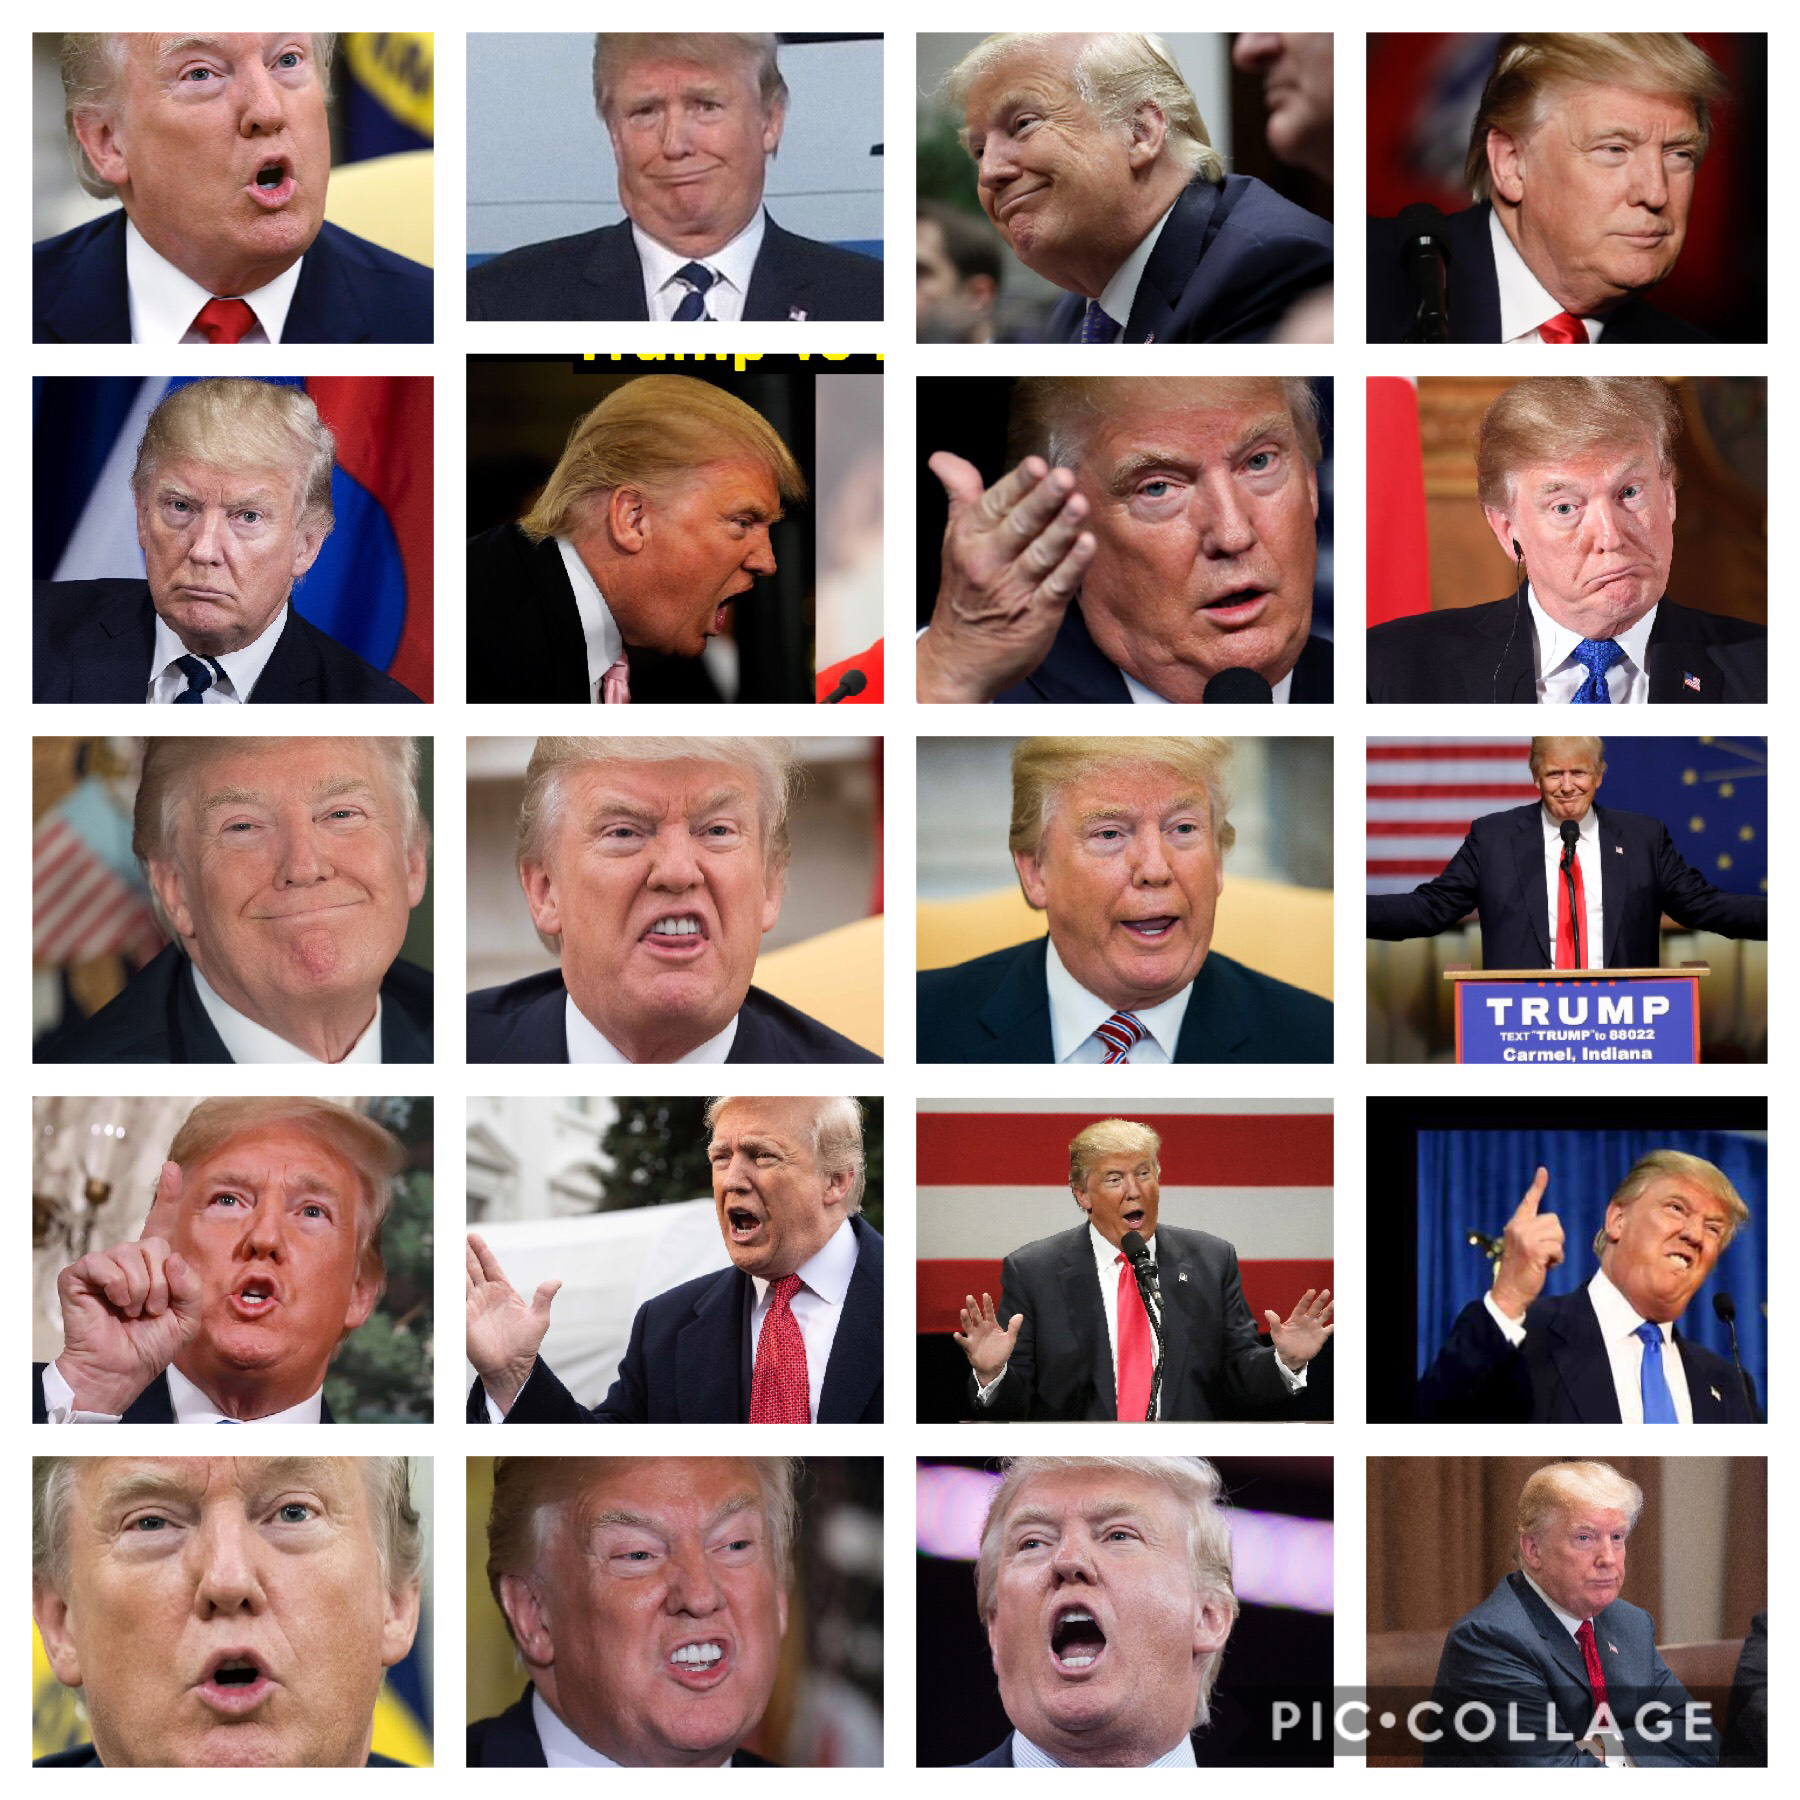 The weird faces of Donald Trump